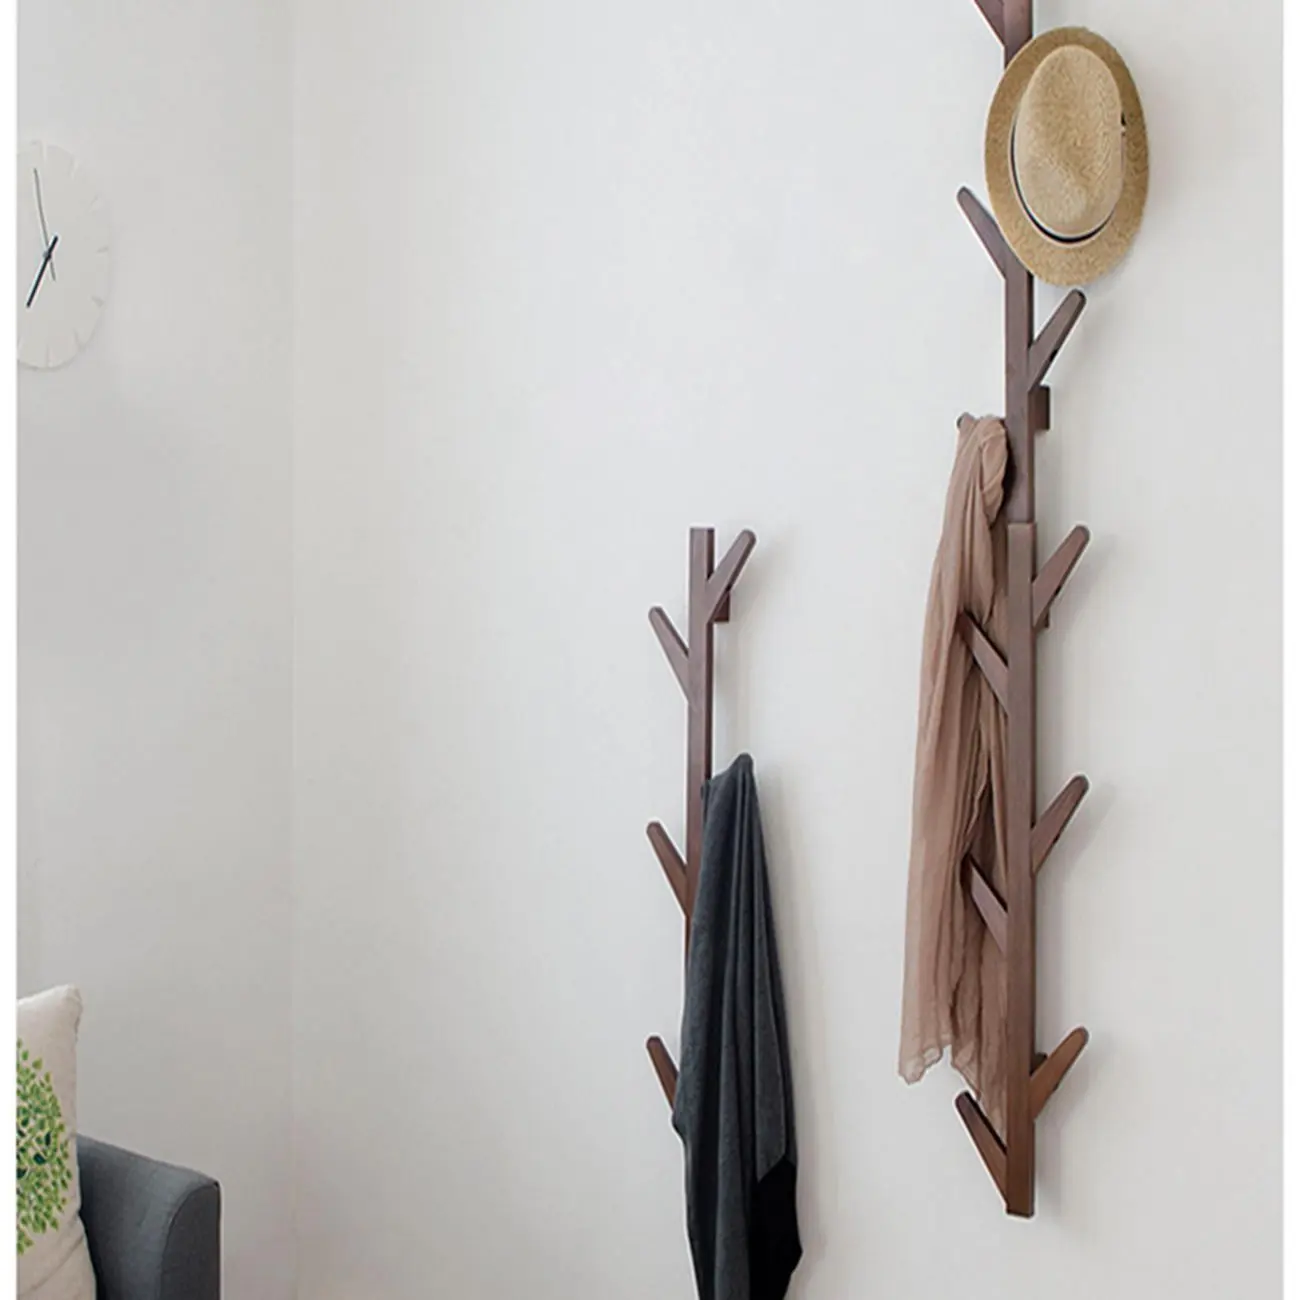 Buy donfohy foyer entrance decorative wall mount shelf wall coat rack ...